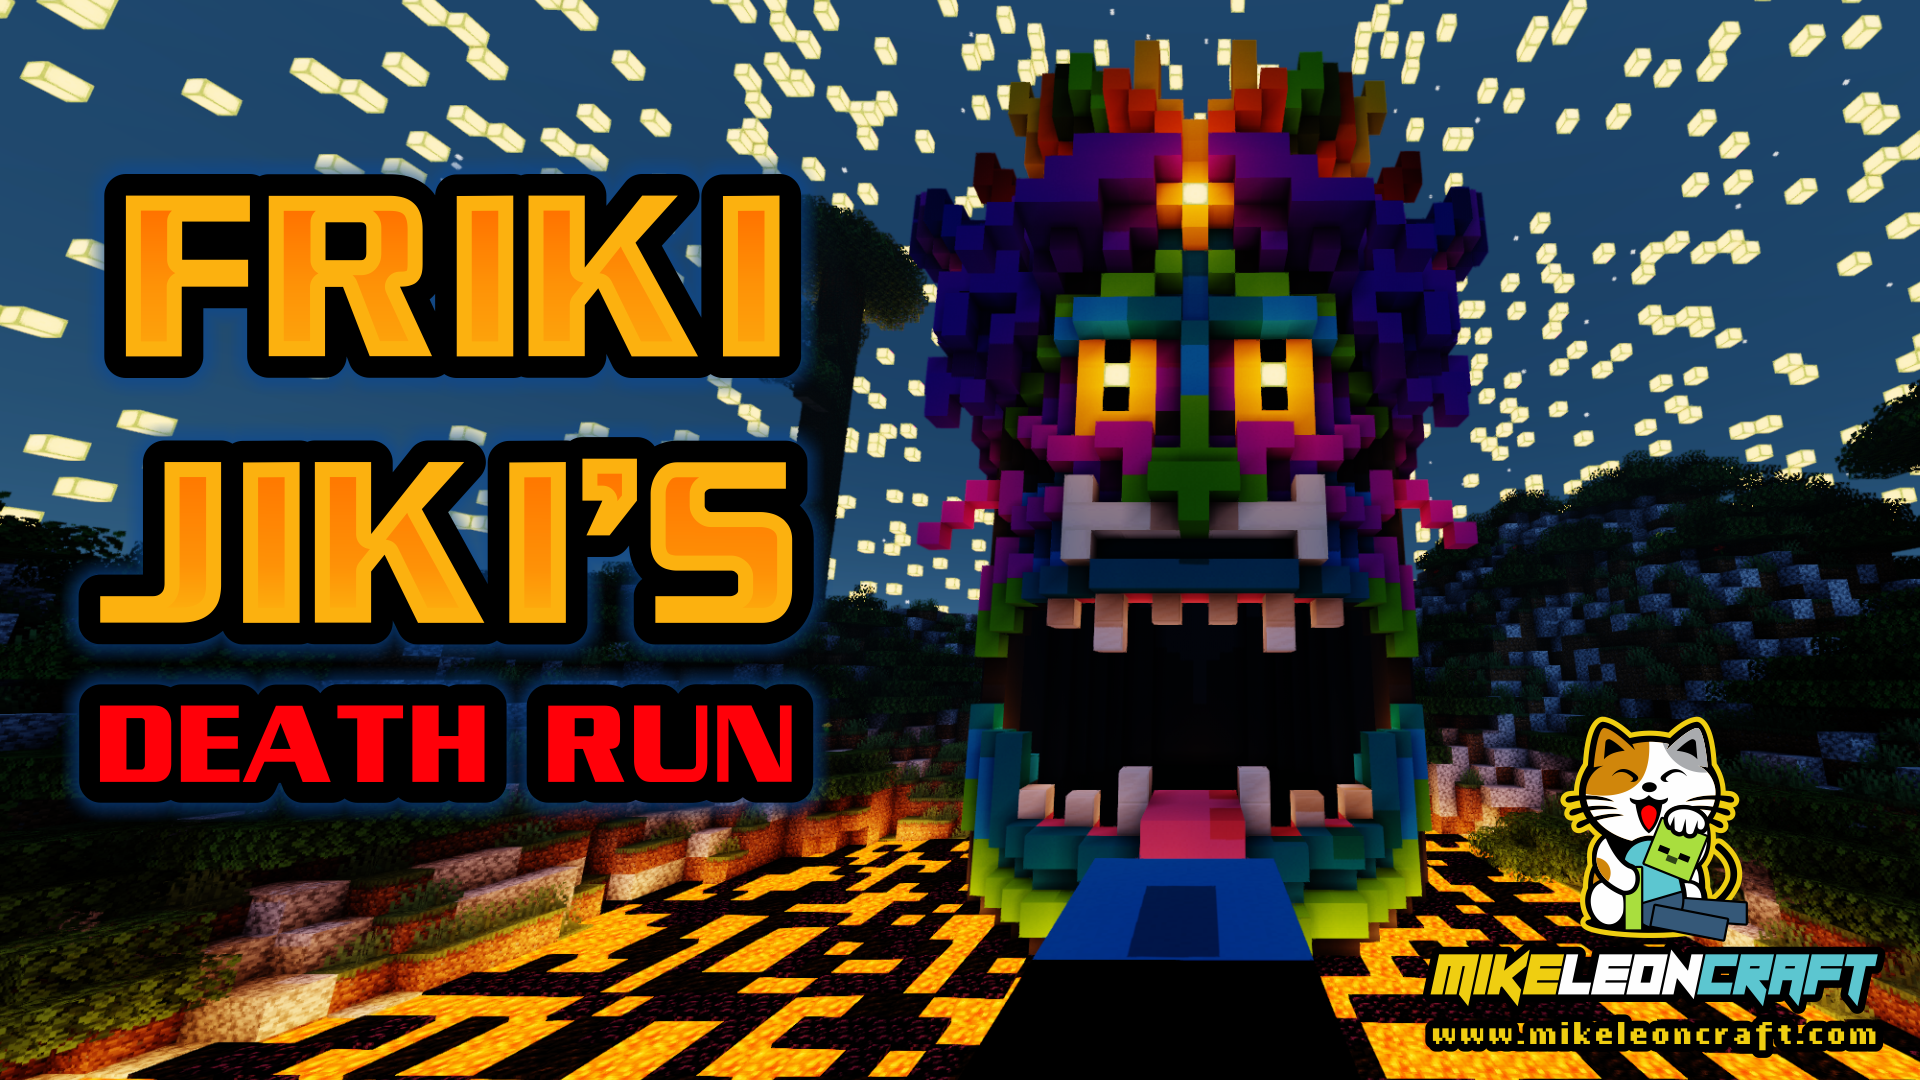 Download Friki Jiki's Death Run for Minecraft 1.15.2